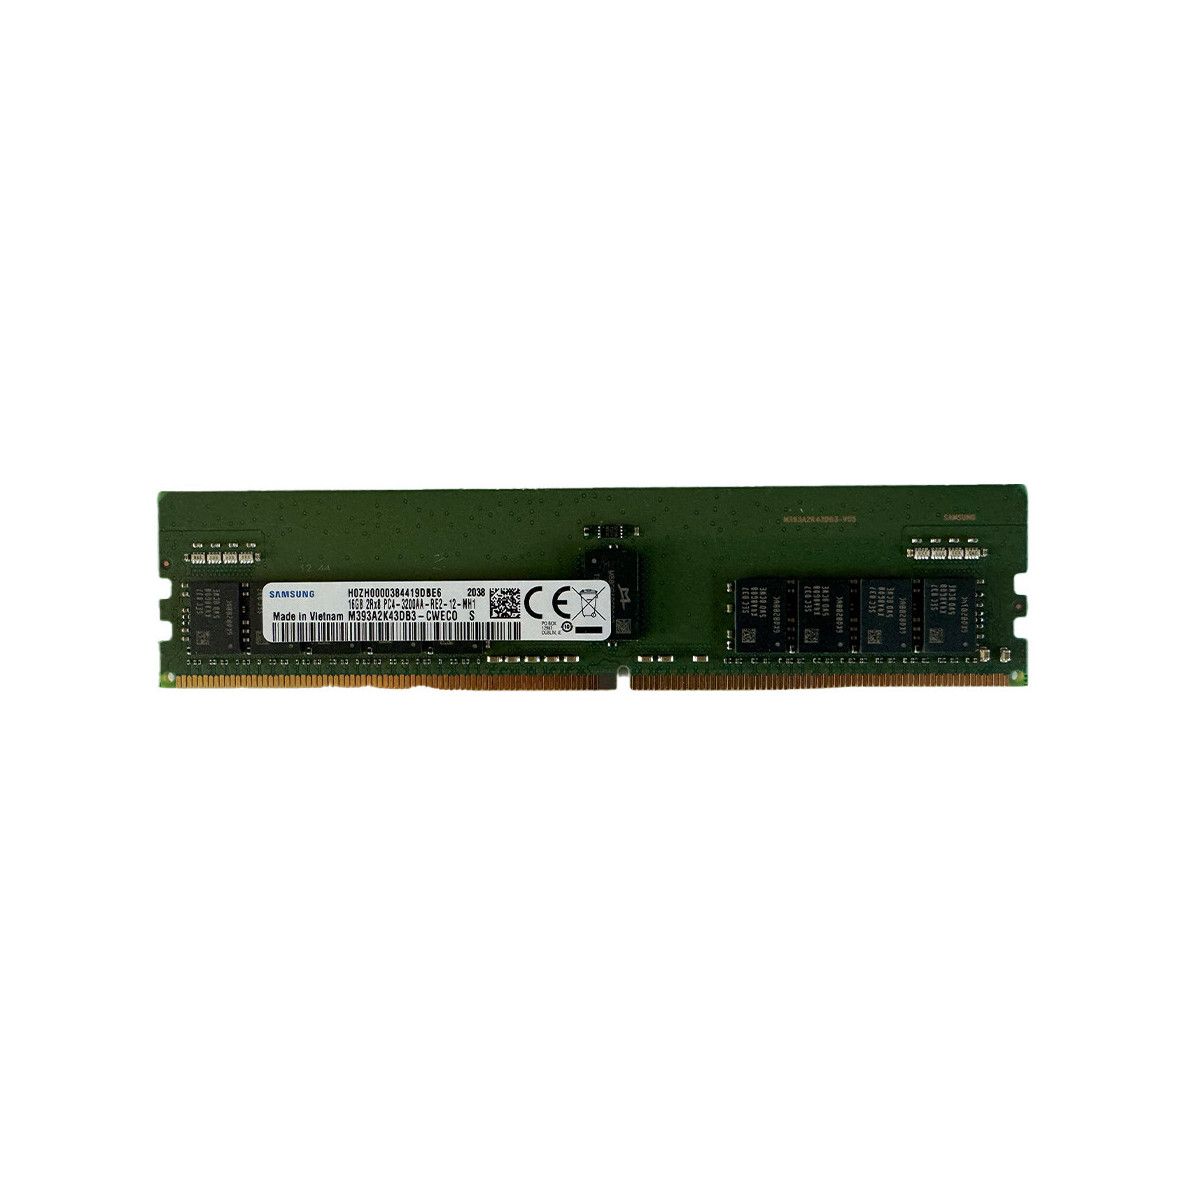 AB214251-MS - Memstar 1x 16GB DDR4-3200 RDIMM PC4-25600R - Memorie OEM compatibilă Mem-Star 1 - Memstar 